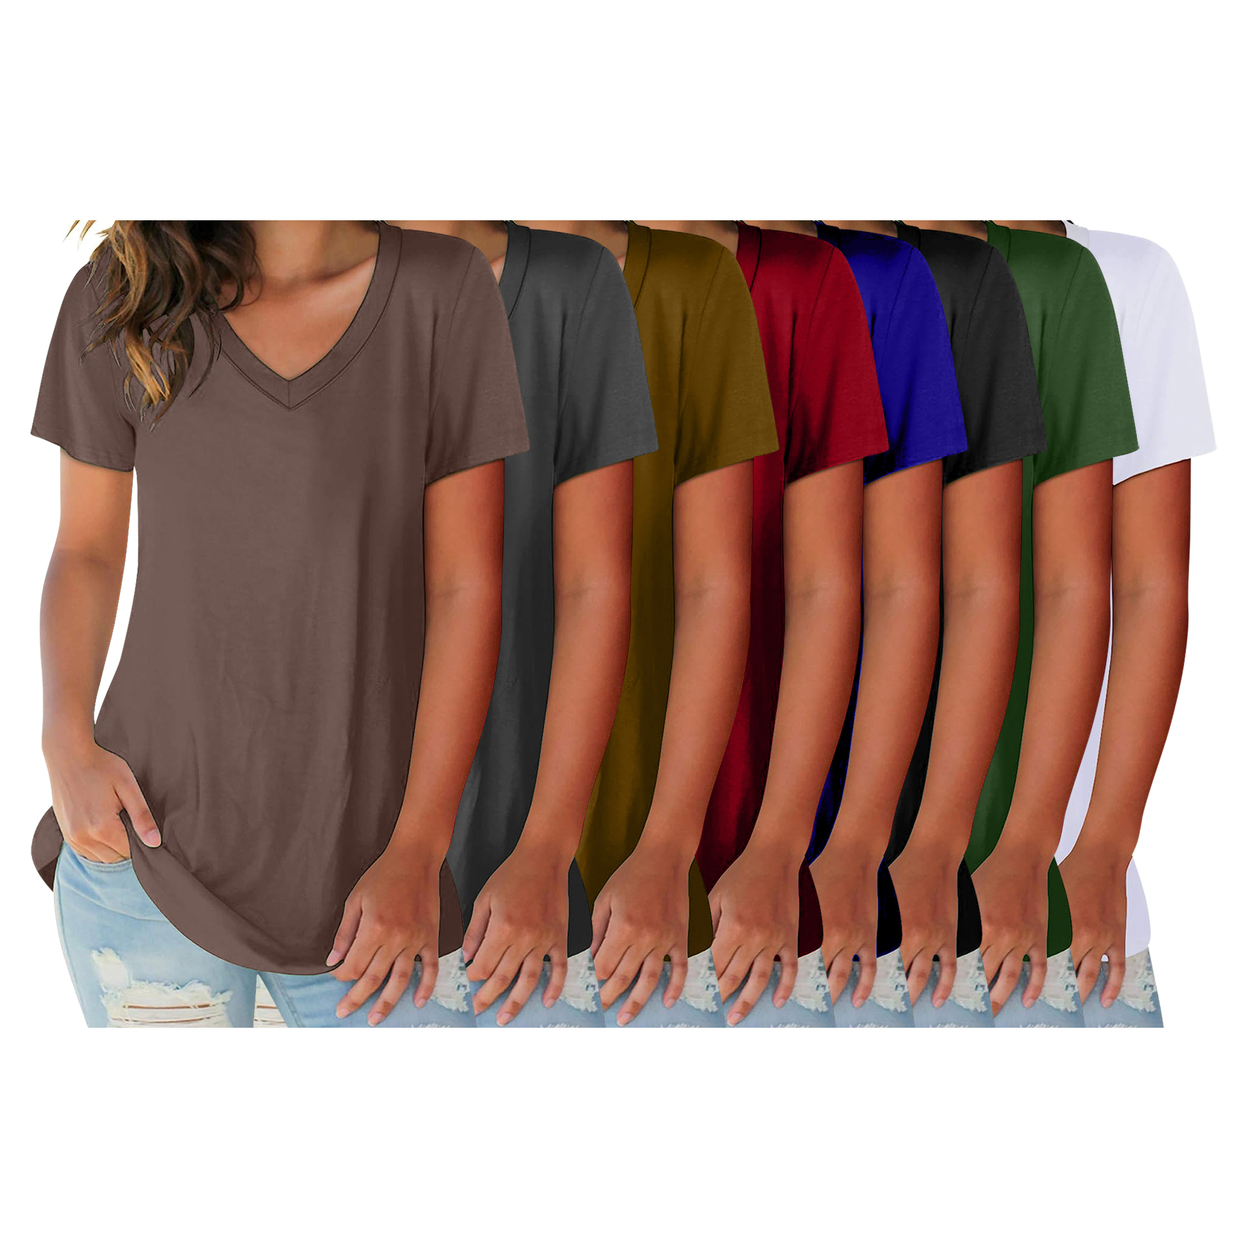 2-Pack: Women's Ultra Soft Smooth Cotton Blend Basic V-Neck Short Sleeve Shirts - Black & Brown, Xx-large